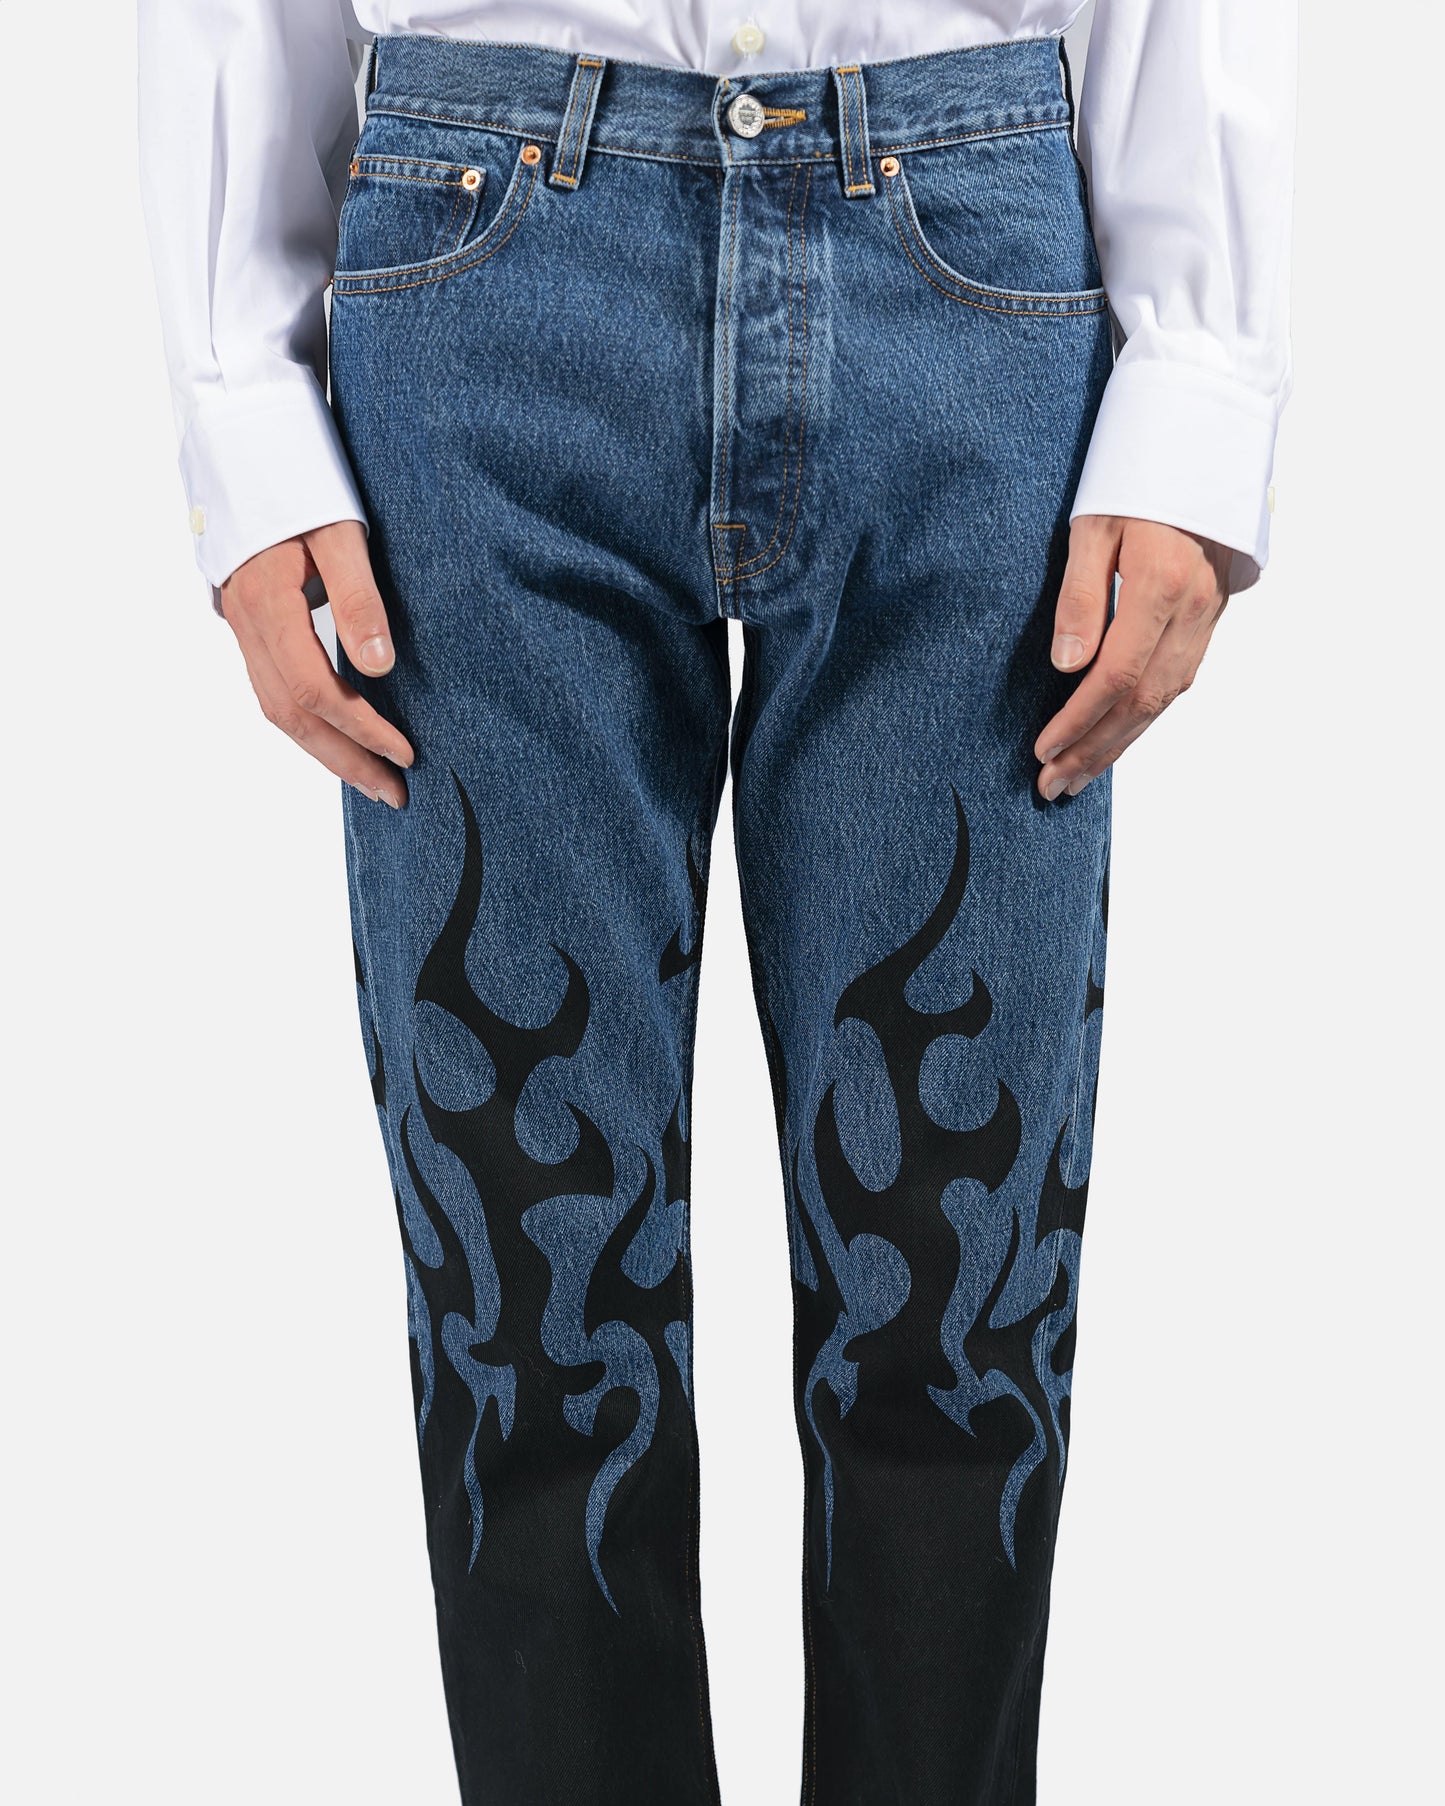 VETEMENTS Men's Jeans Fire Straight Leg Denim in Blue